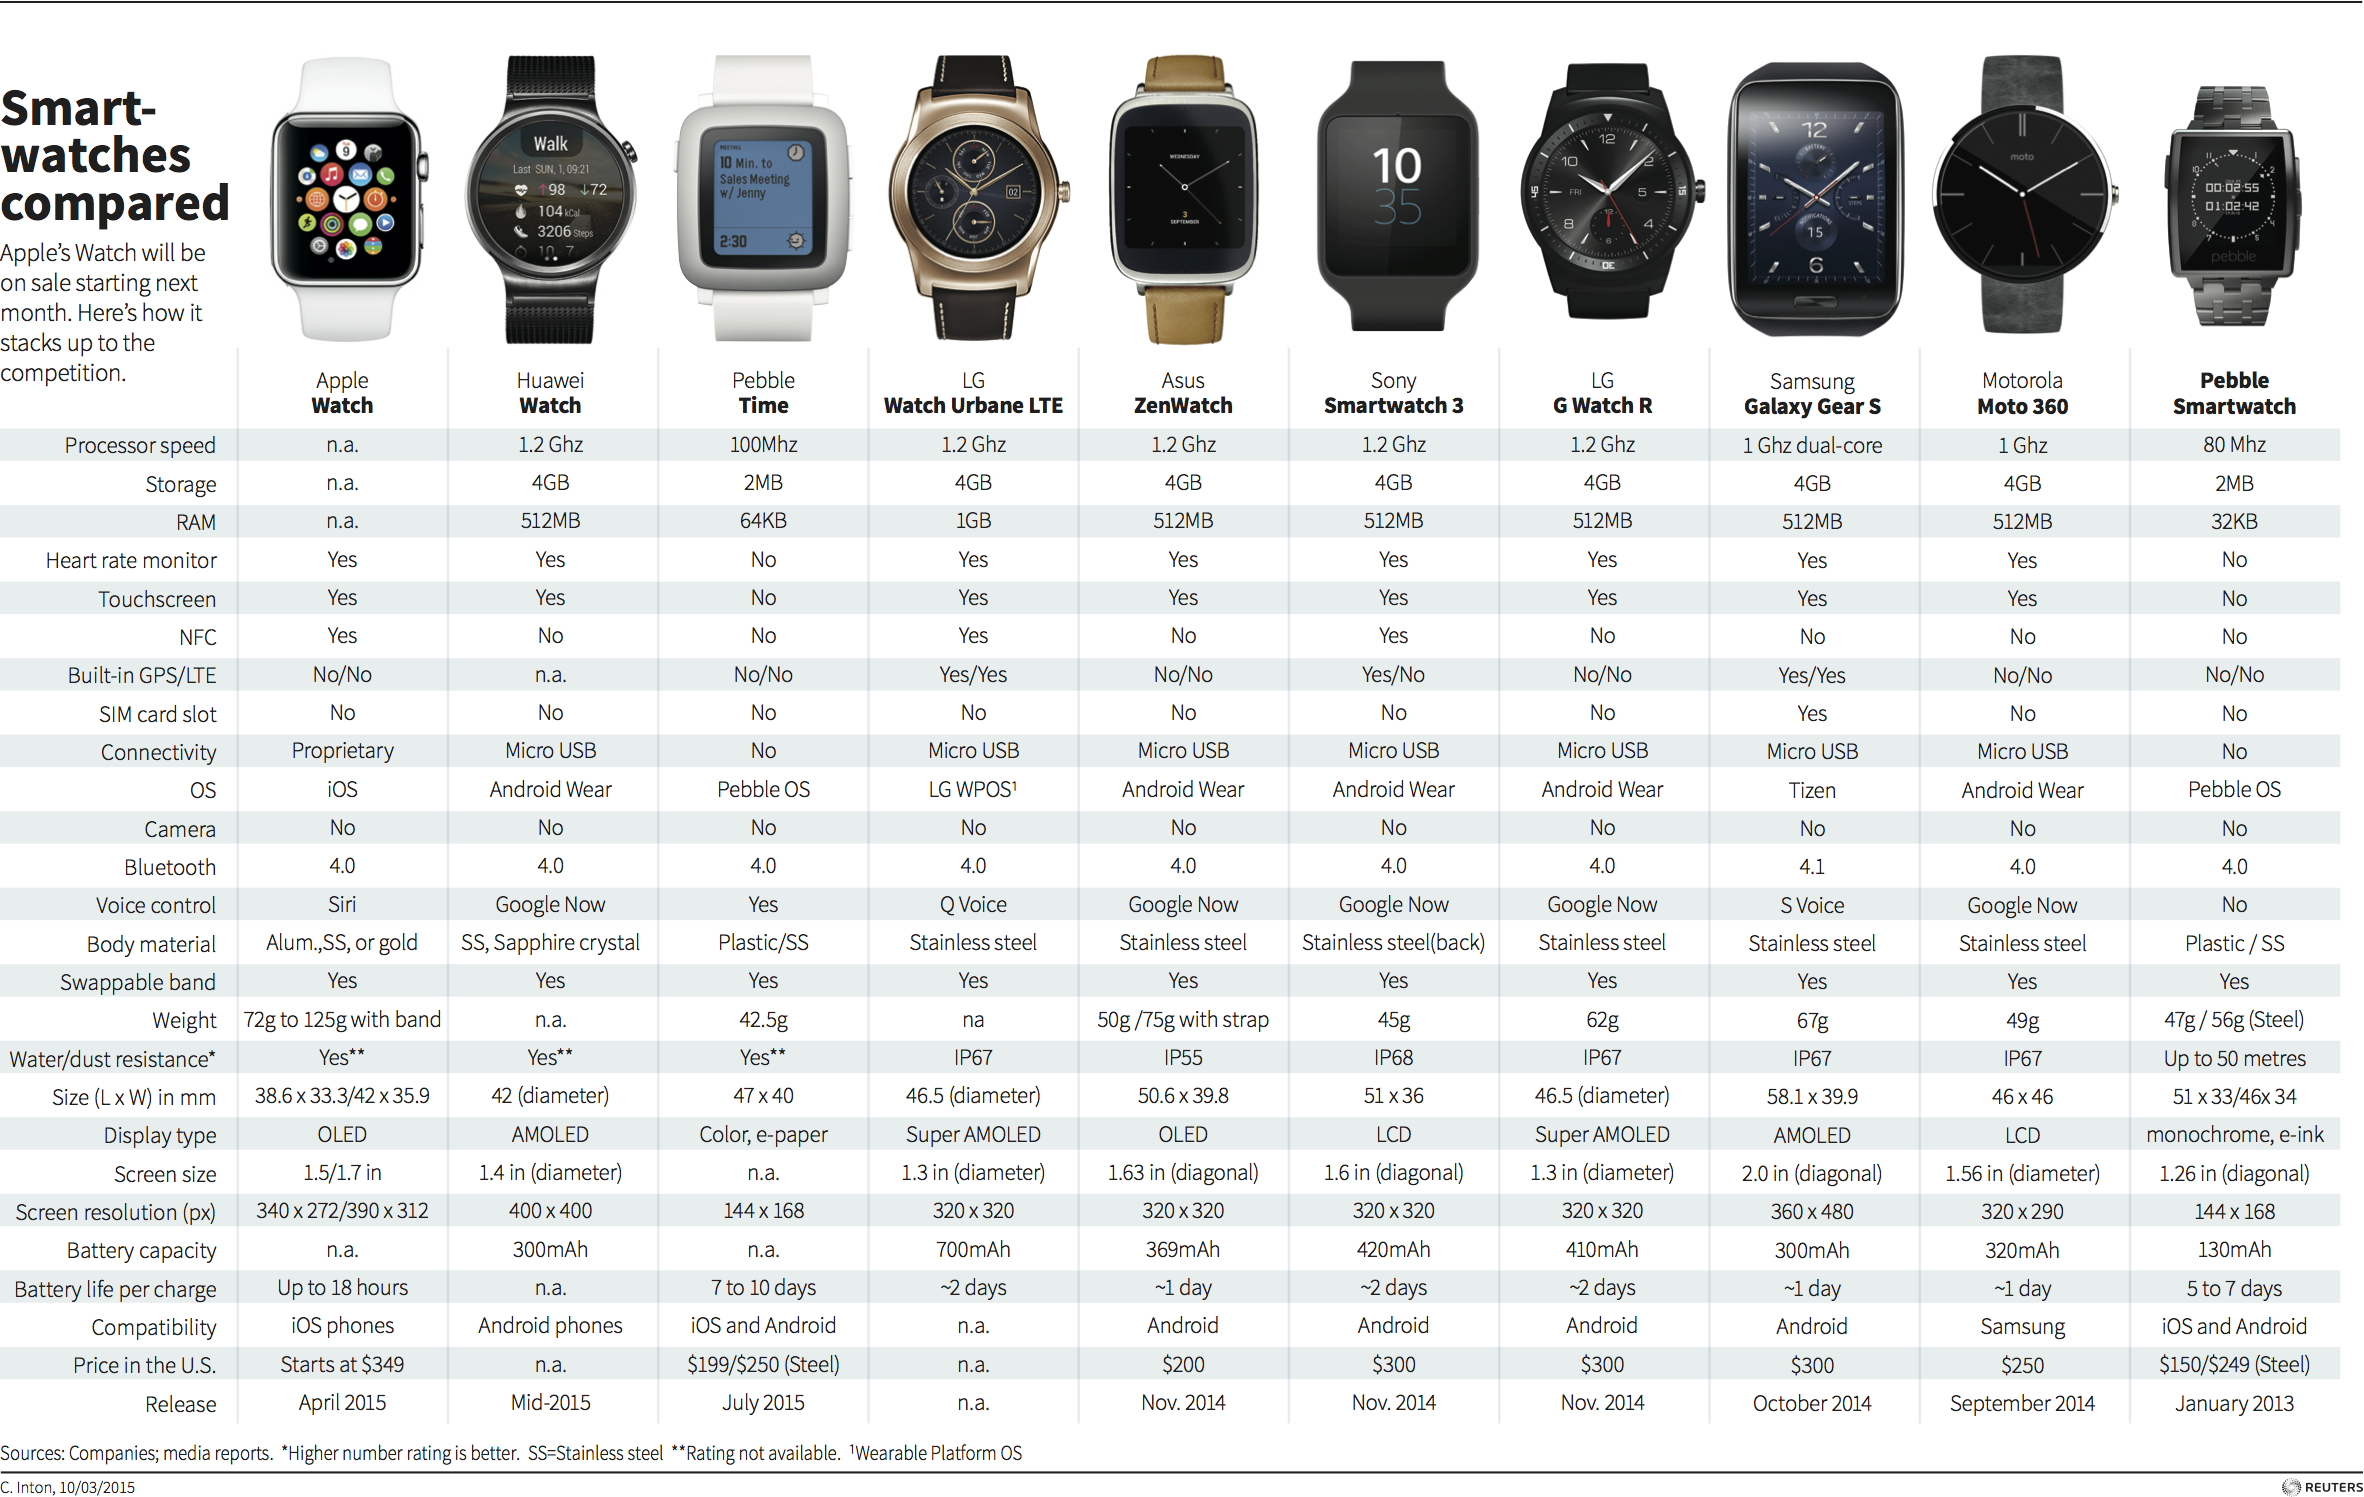 Samsung Smartwatch Comparison Chart